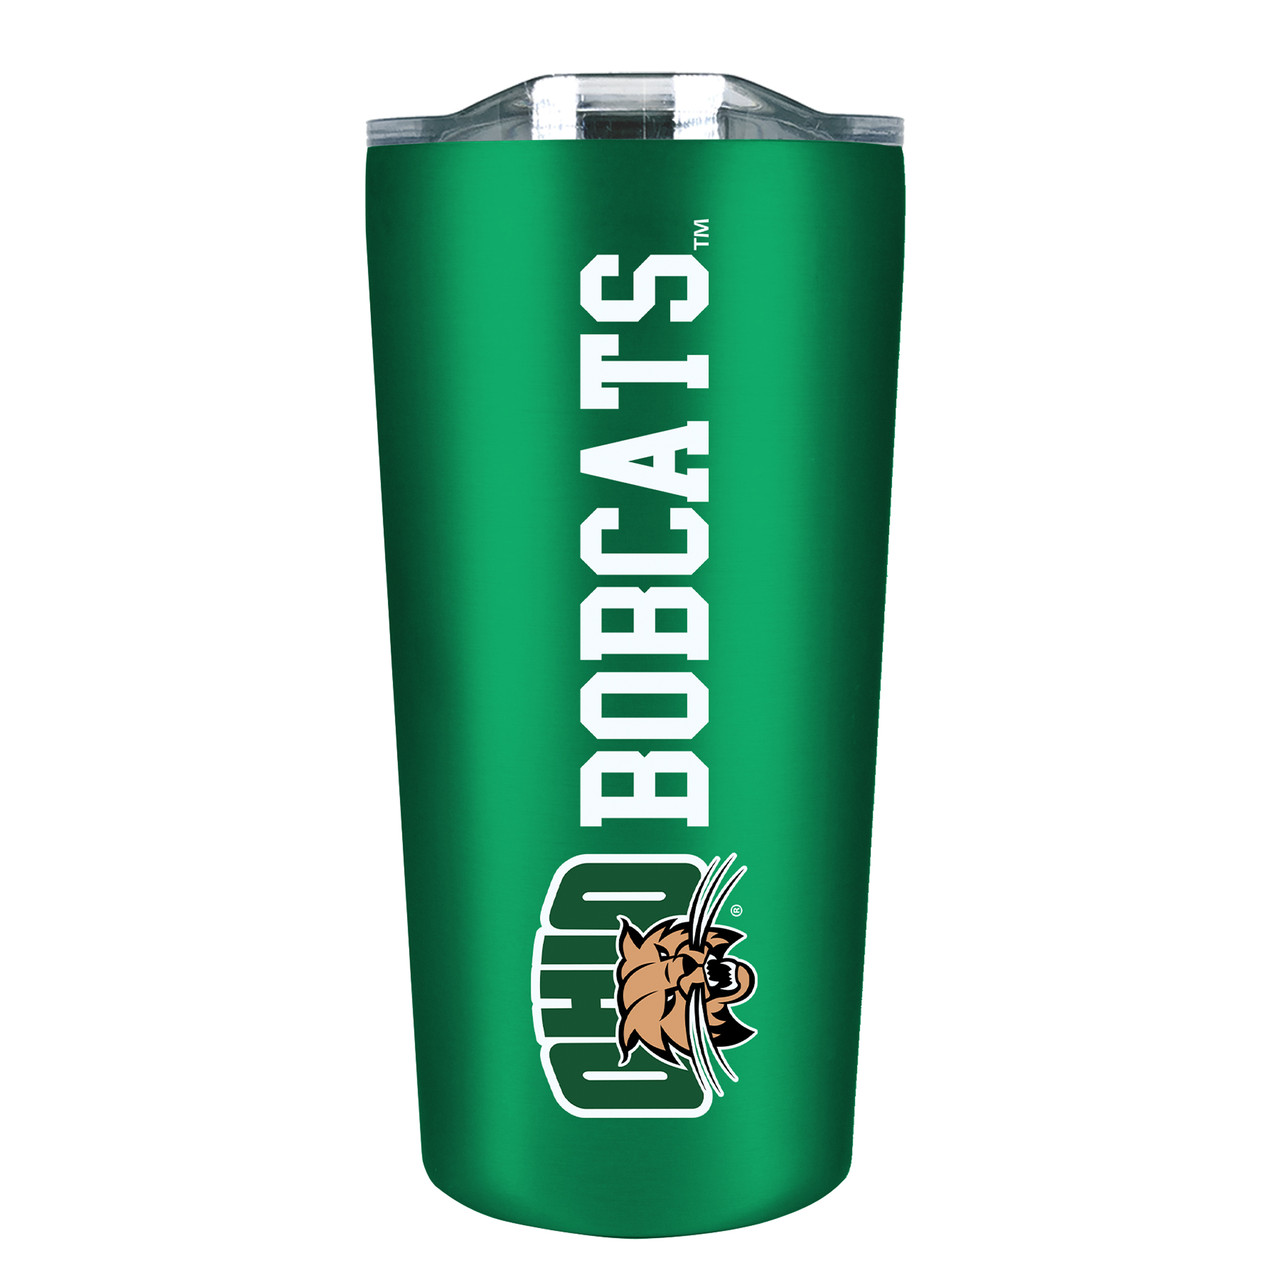 Ohio University Bobcats - 18oz Stainless Soft Touch Tumbler - Green